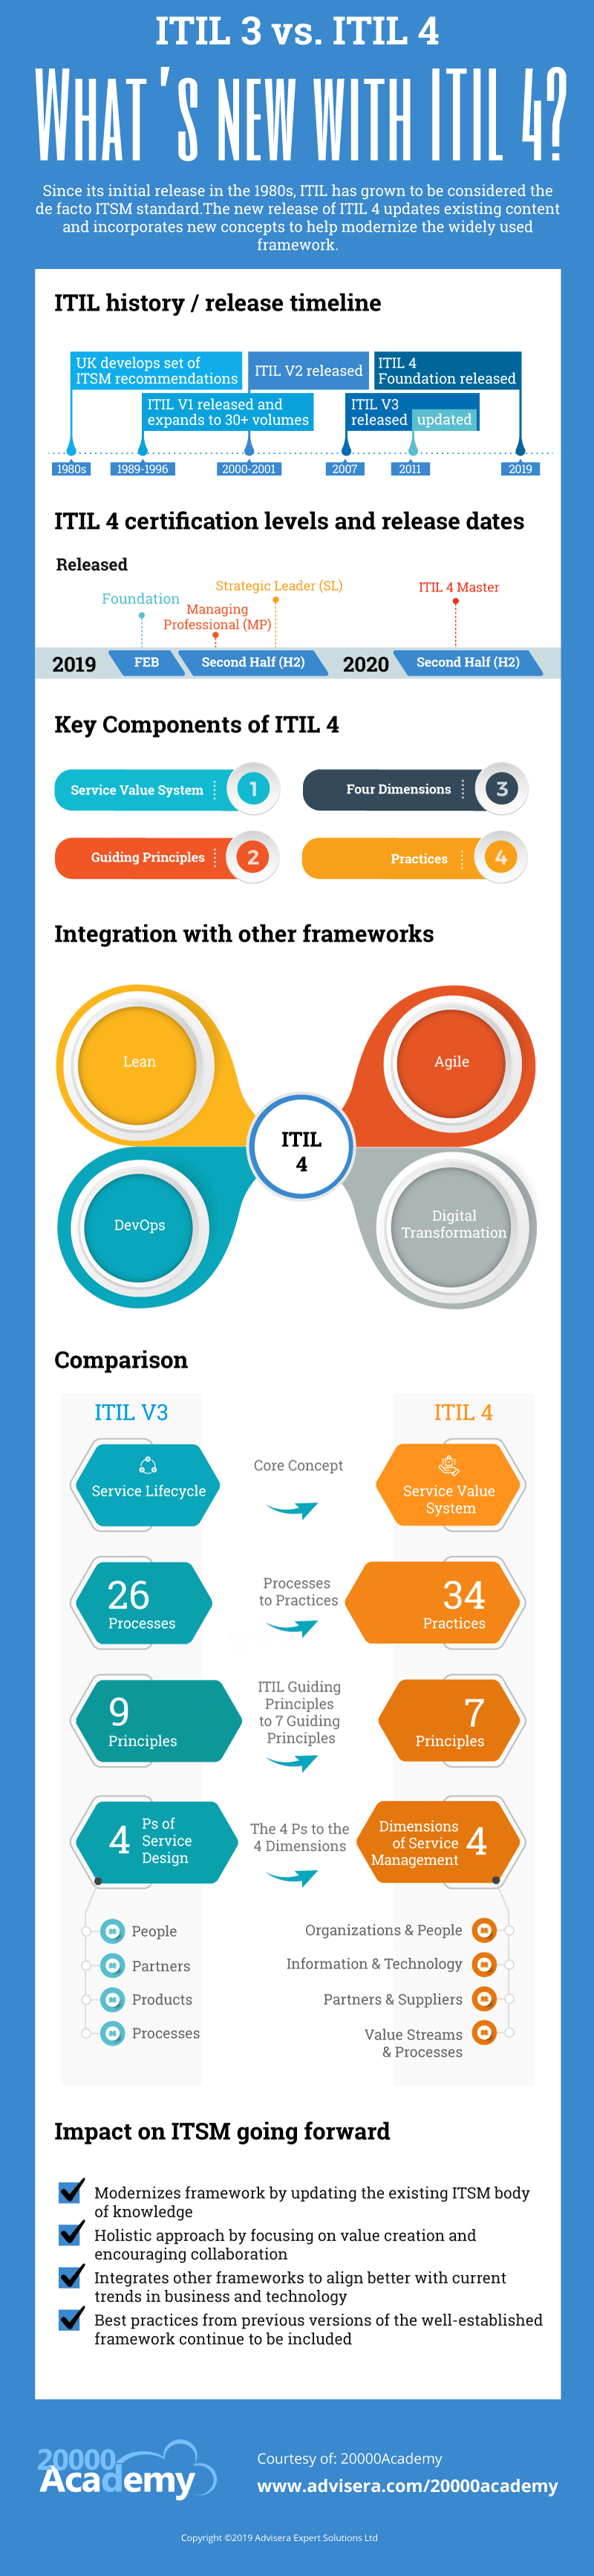 Infographic: ITIL 3 vs. ITIL 4